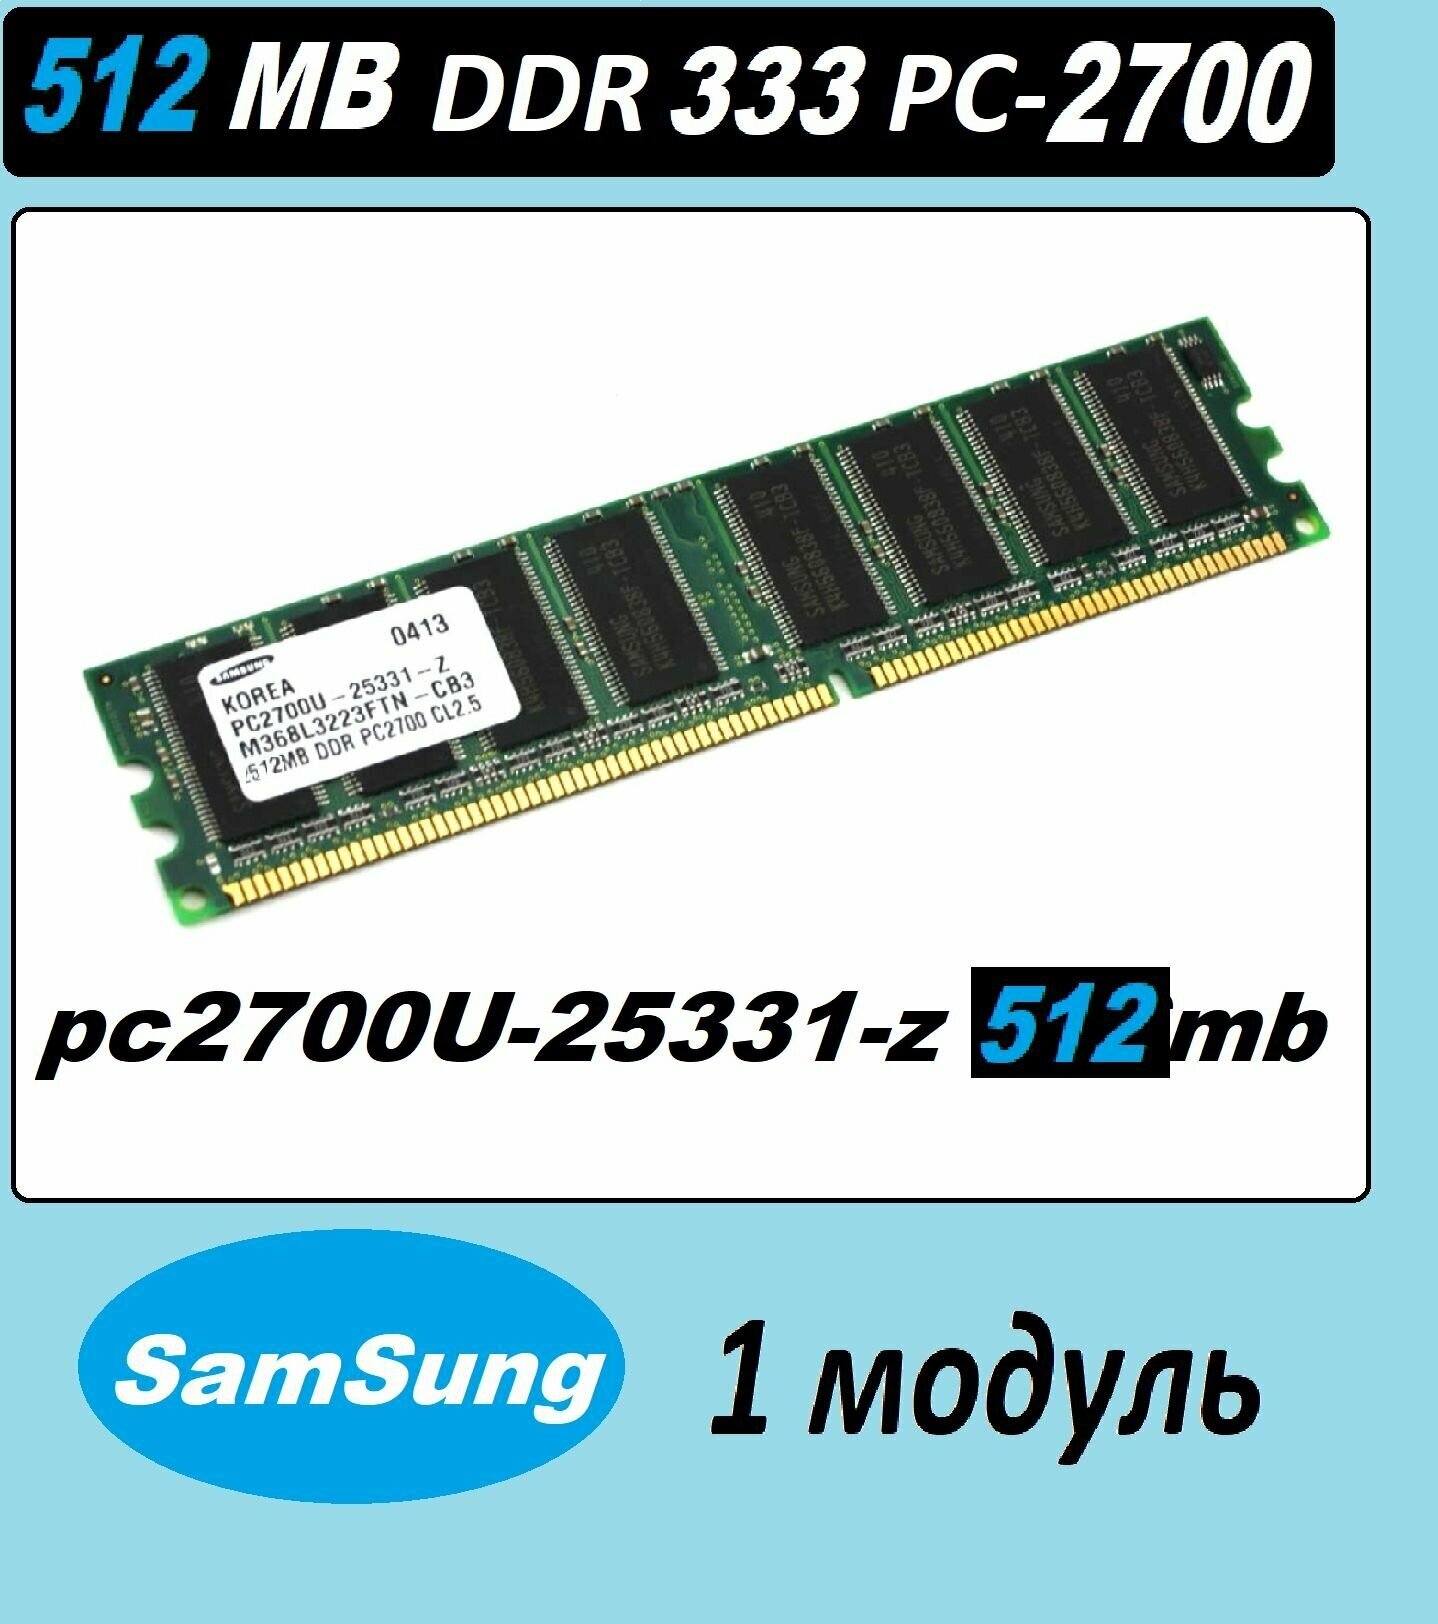 Оперативная память SamSung 512mb ddr pc2700U-25331-z 512 mb 512 Мб ddr 333 pc-2700 OEM